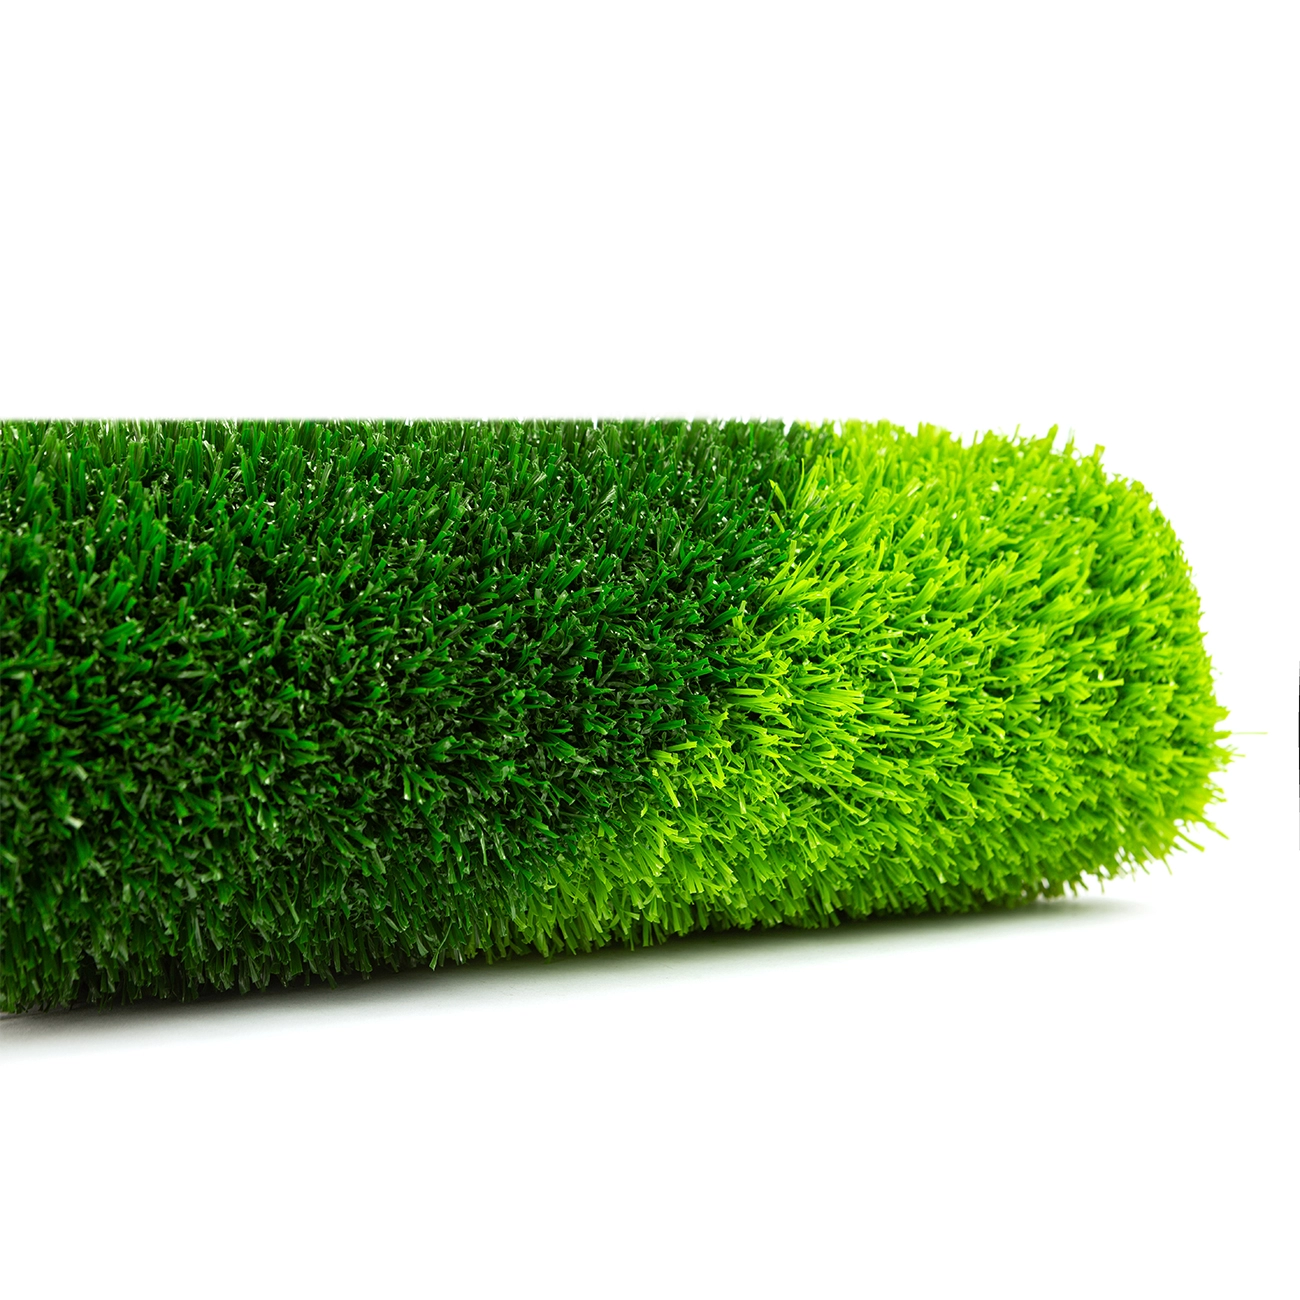 Cheap Soccer Sports Artificial Flooring Grass Turf Lawn